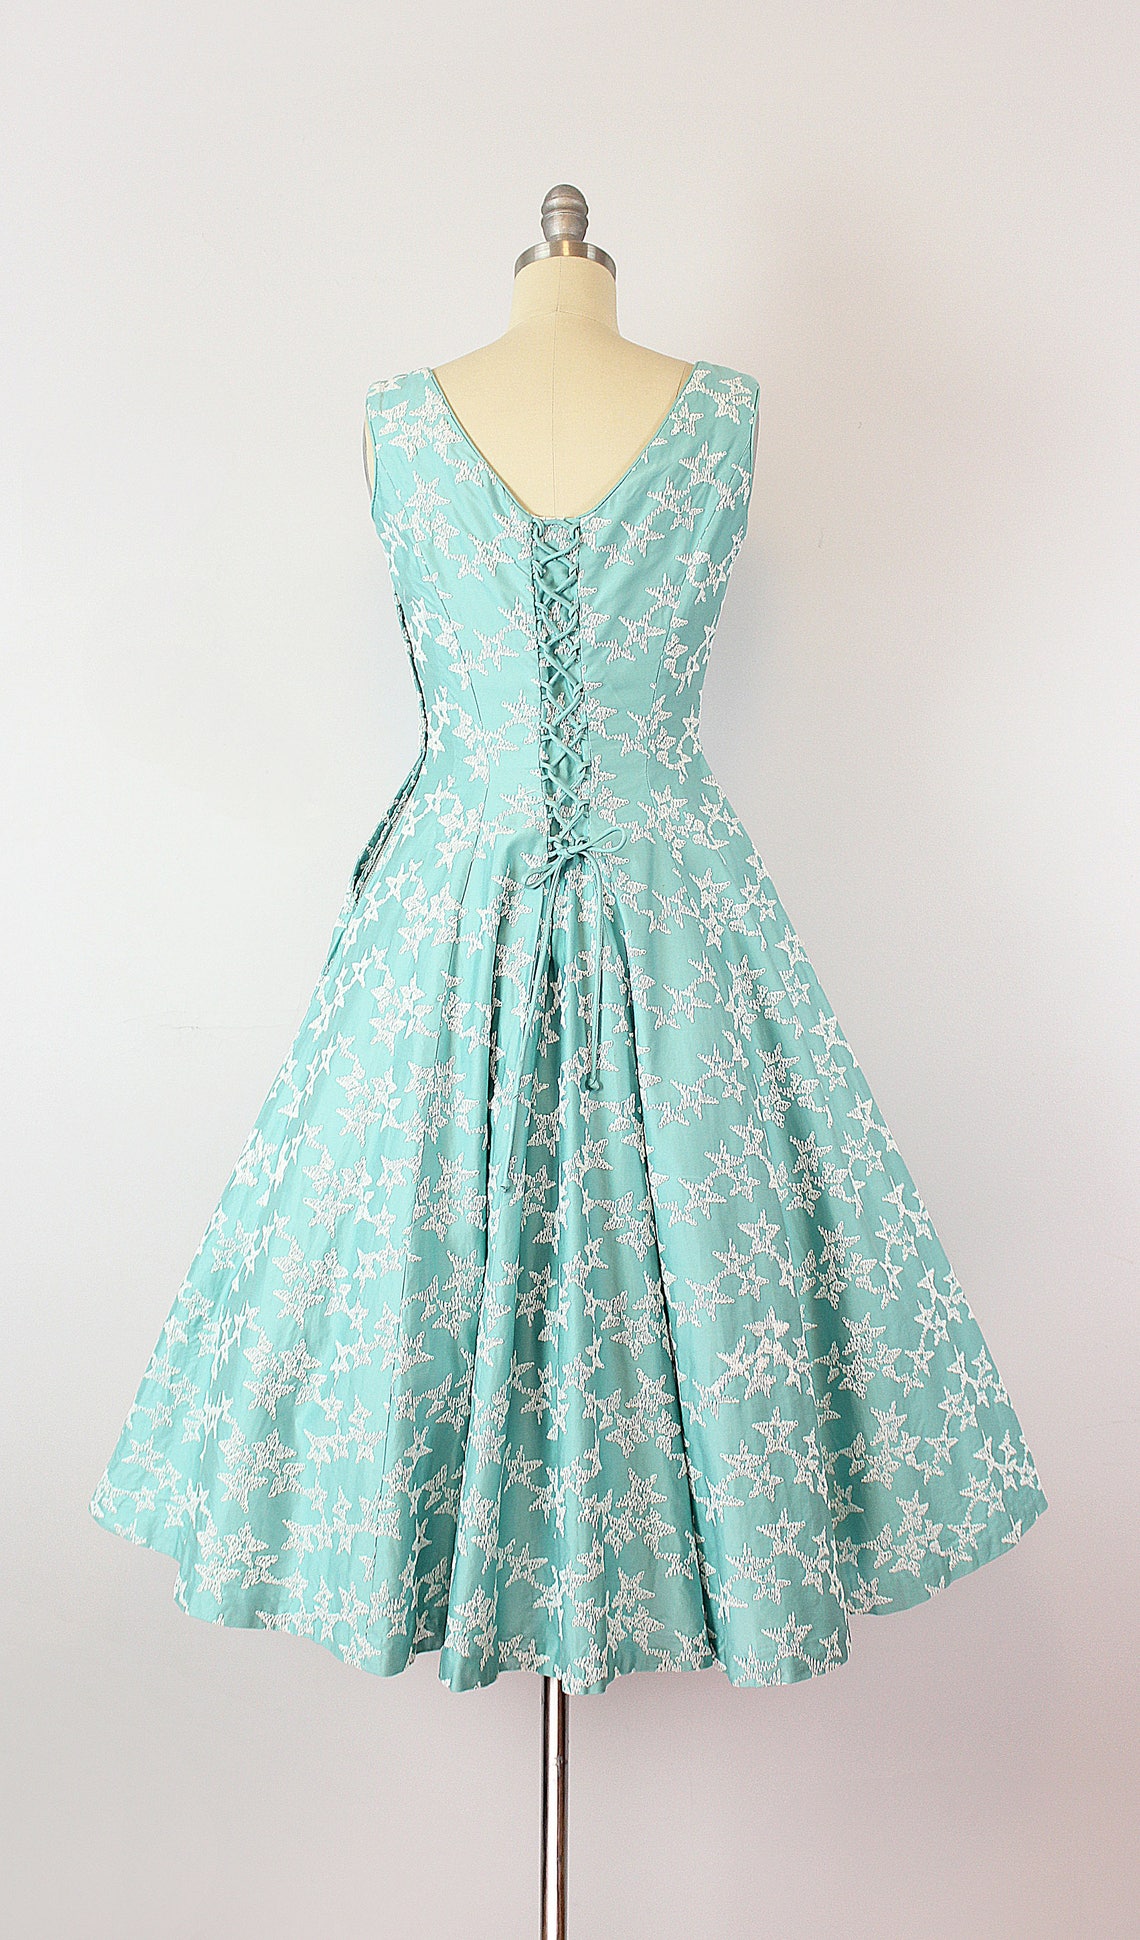 Vintage 50s dress / 1950s aqua blue star embroidered dress / | Etsy